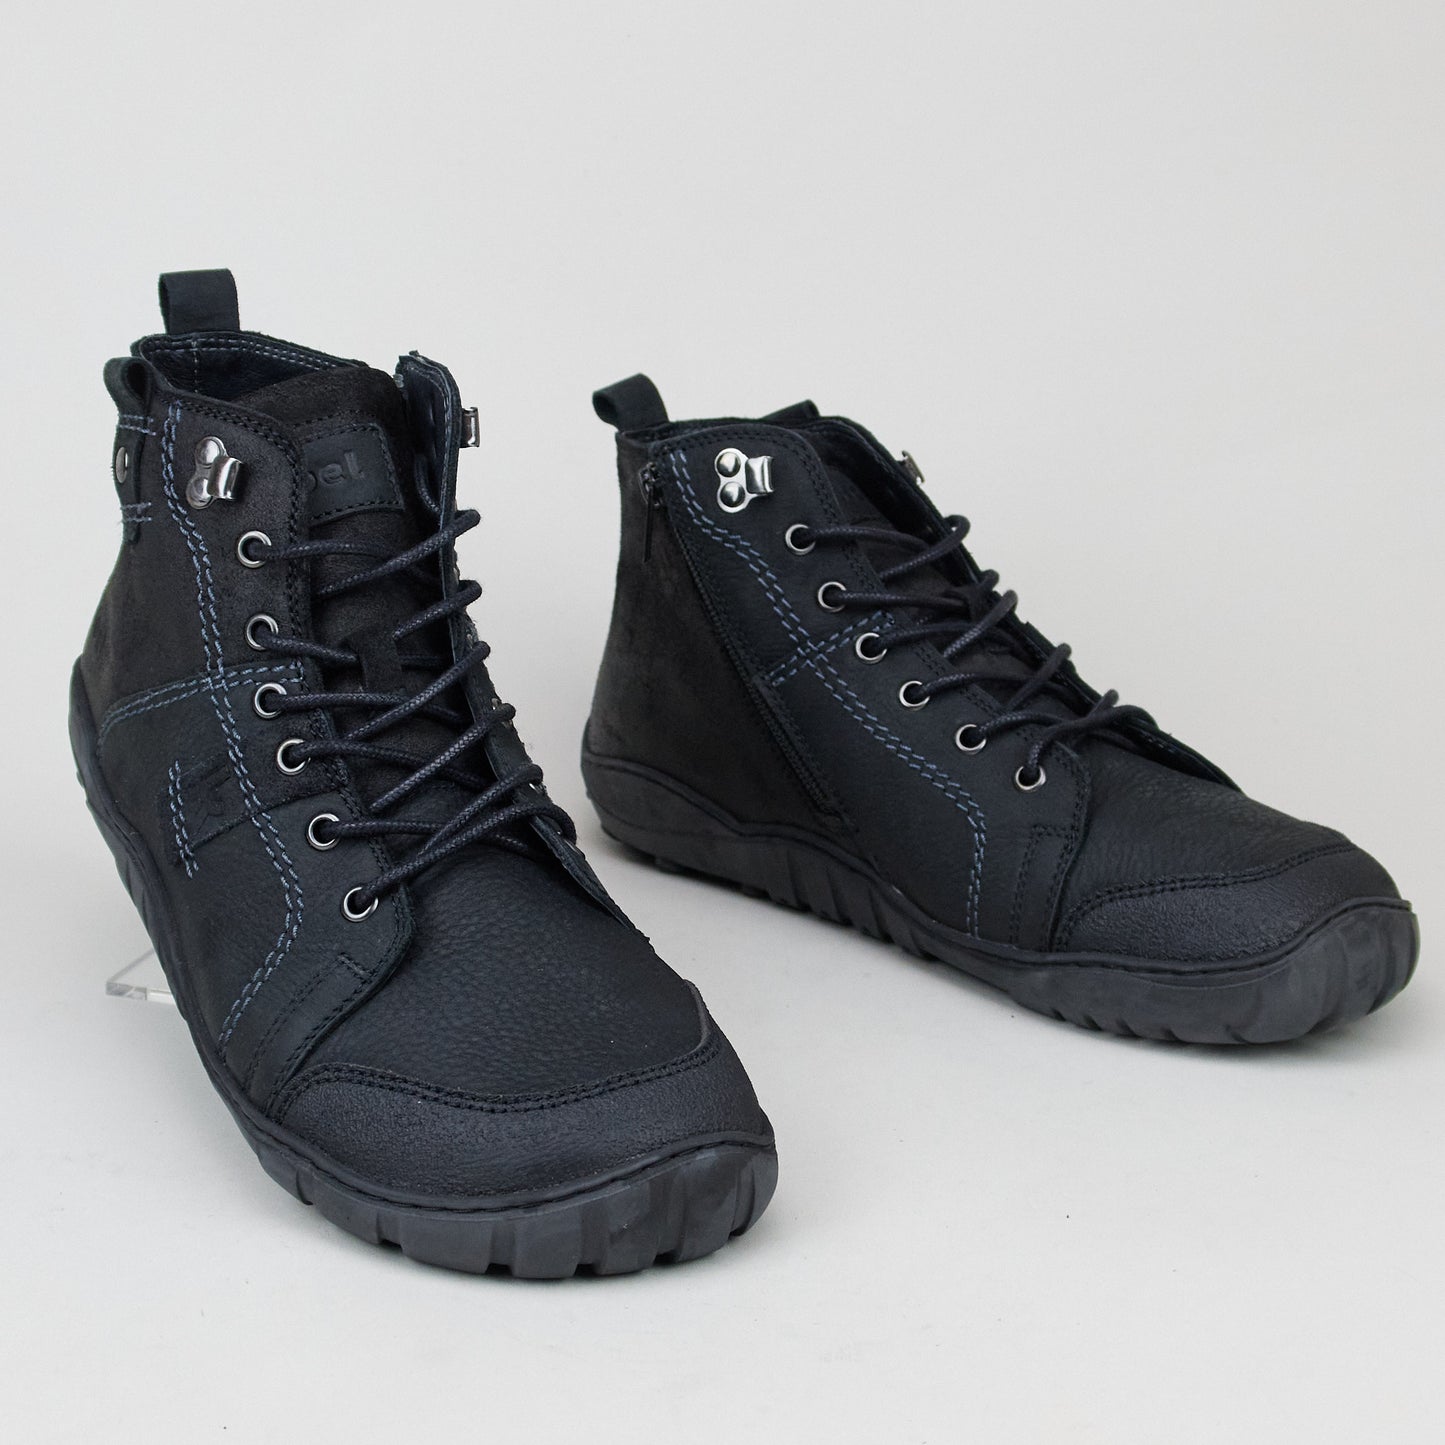 Koel KMEN | BAREFOOT Pax Leather 000 - Black